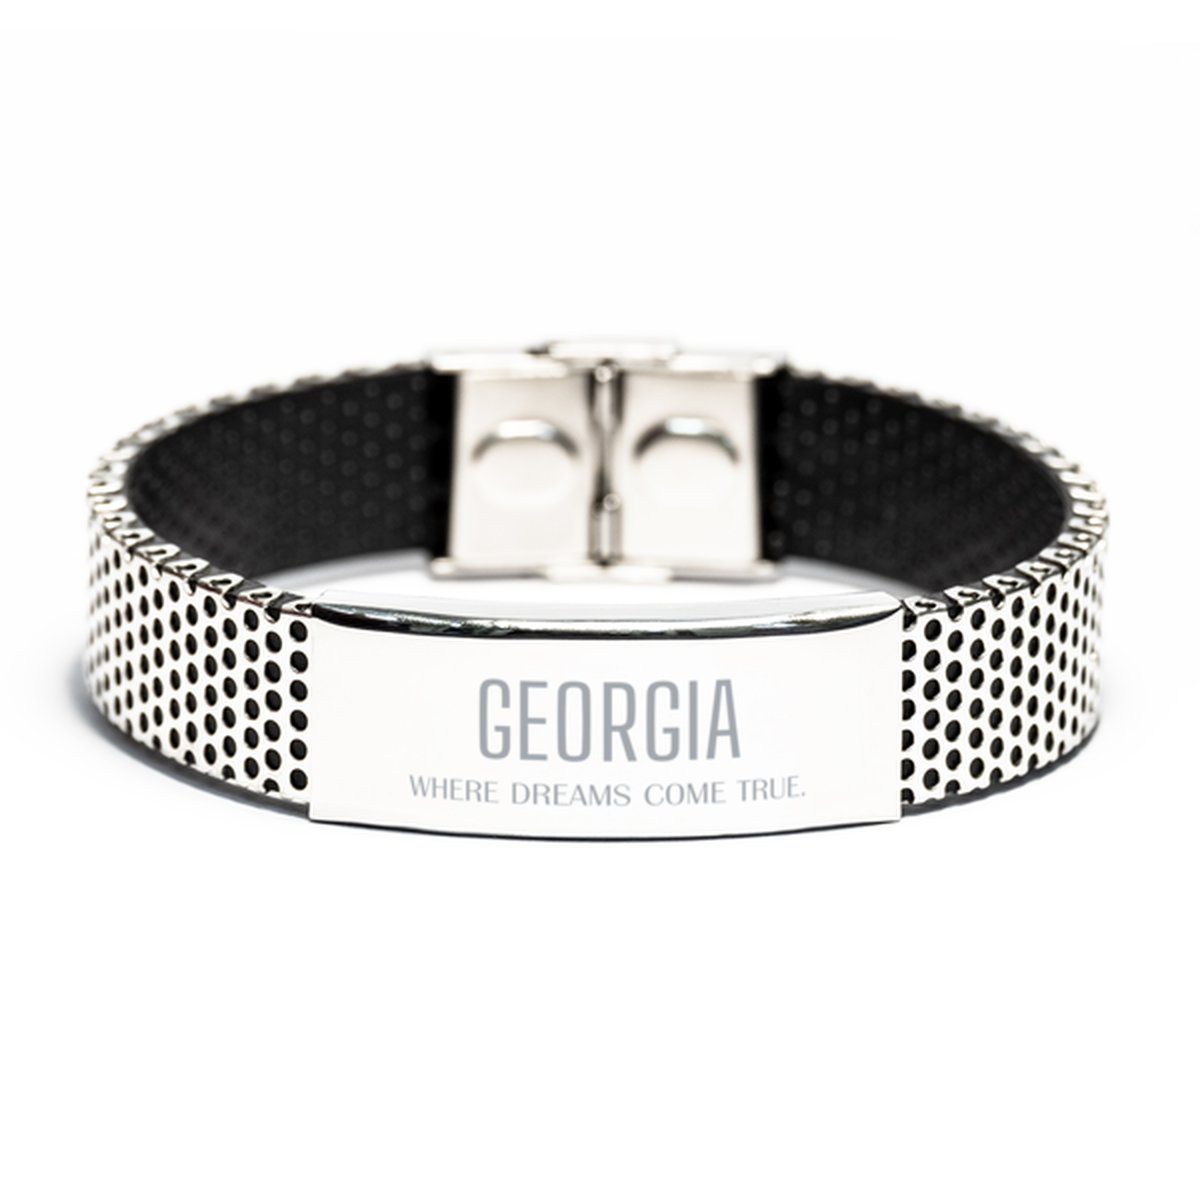 Love Georgia State Stainless Steel Bracelet, Georgia Where dreams come true, Birthday Inspirational Gifts For Georgia Men, Women, Friends